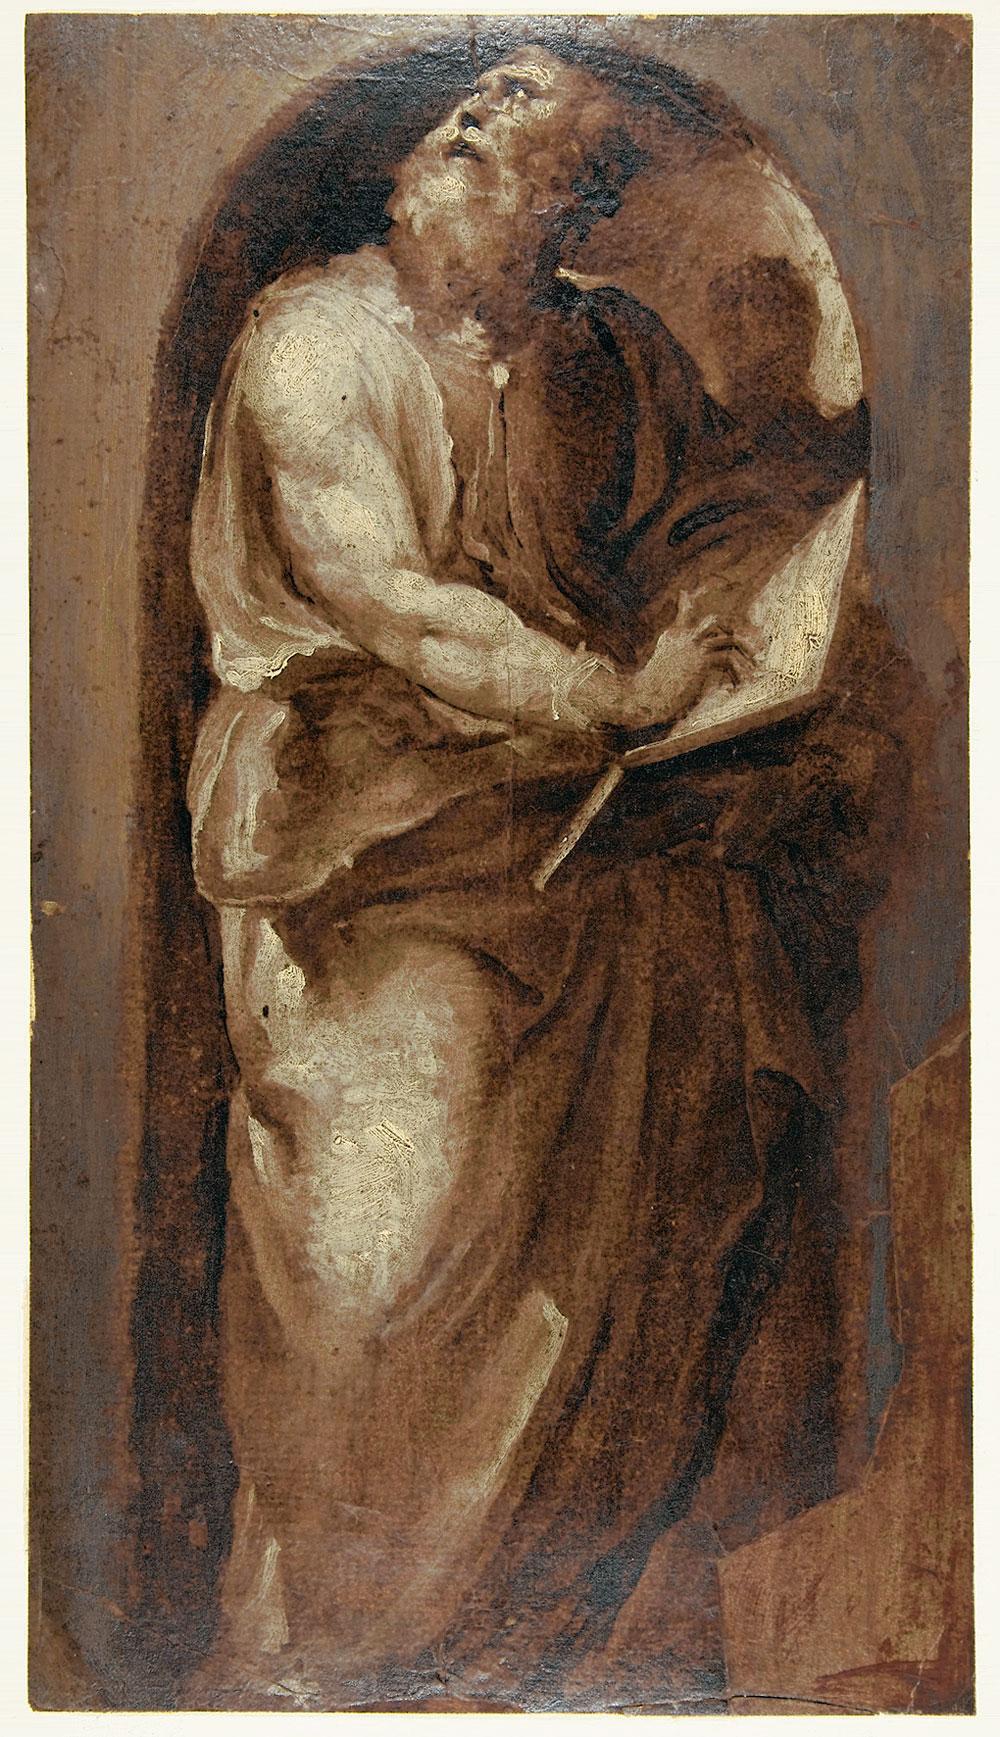 Saint Matthew, Domenico Beccafumi,1538.